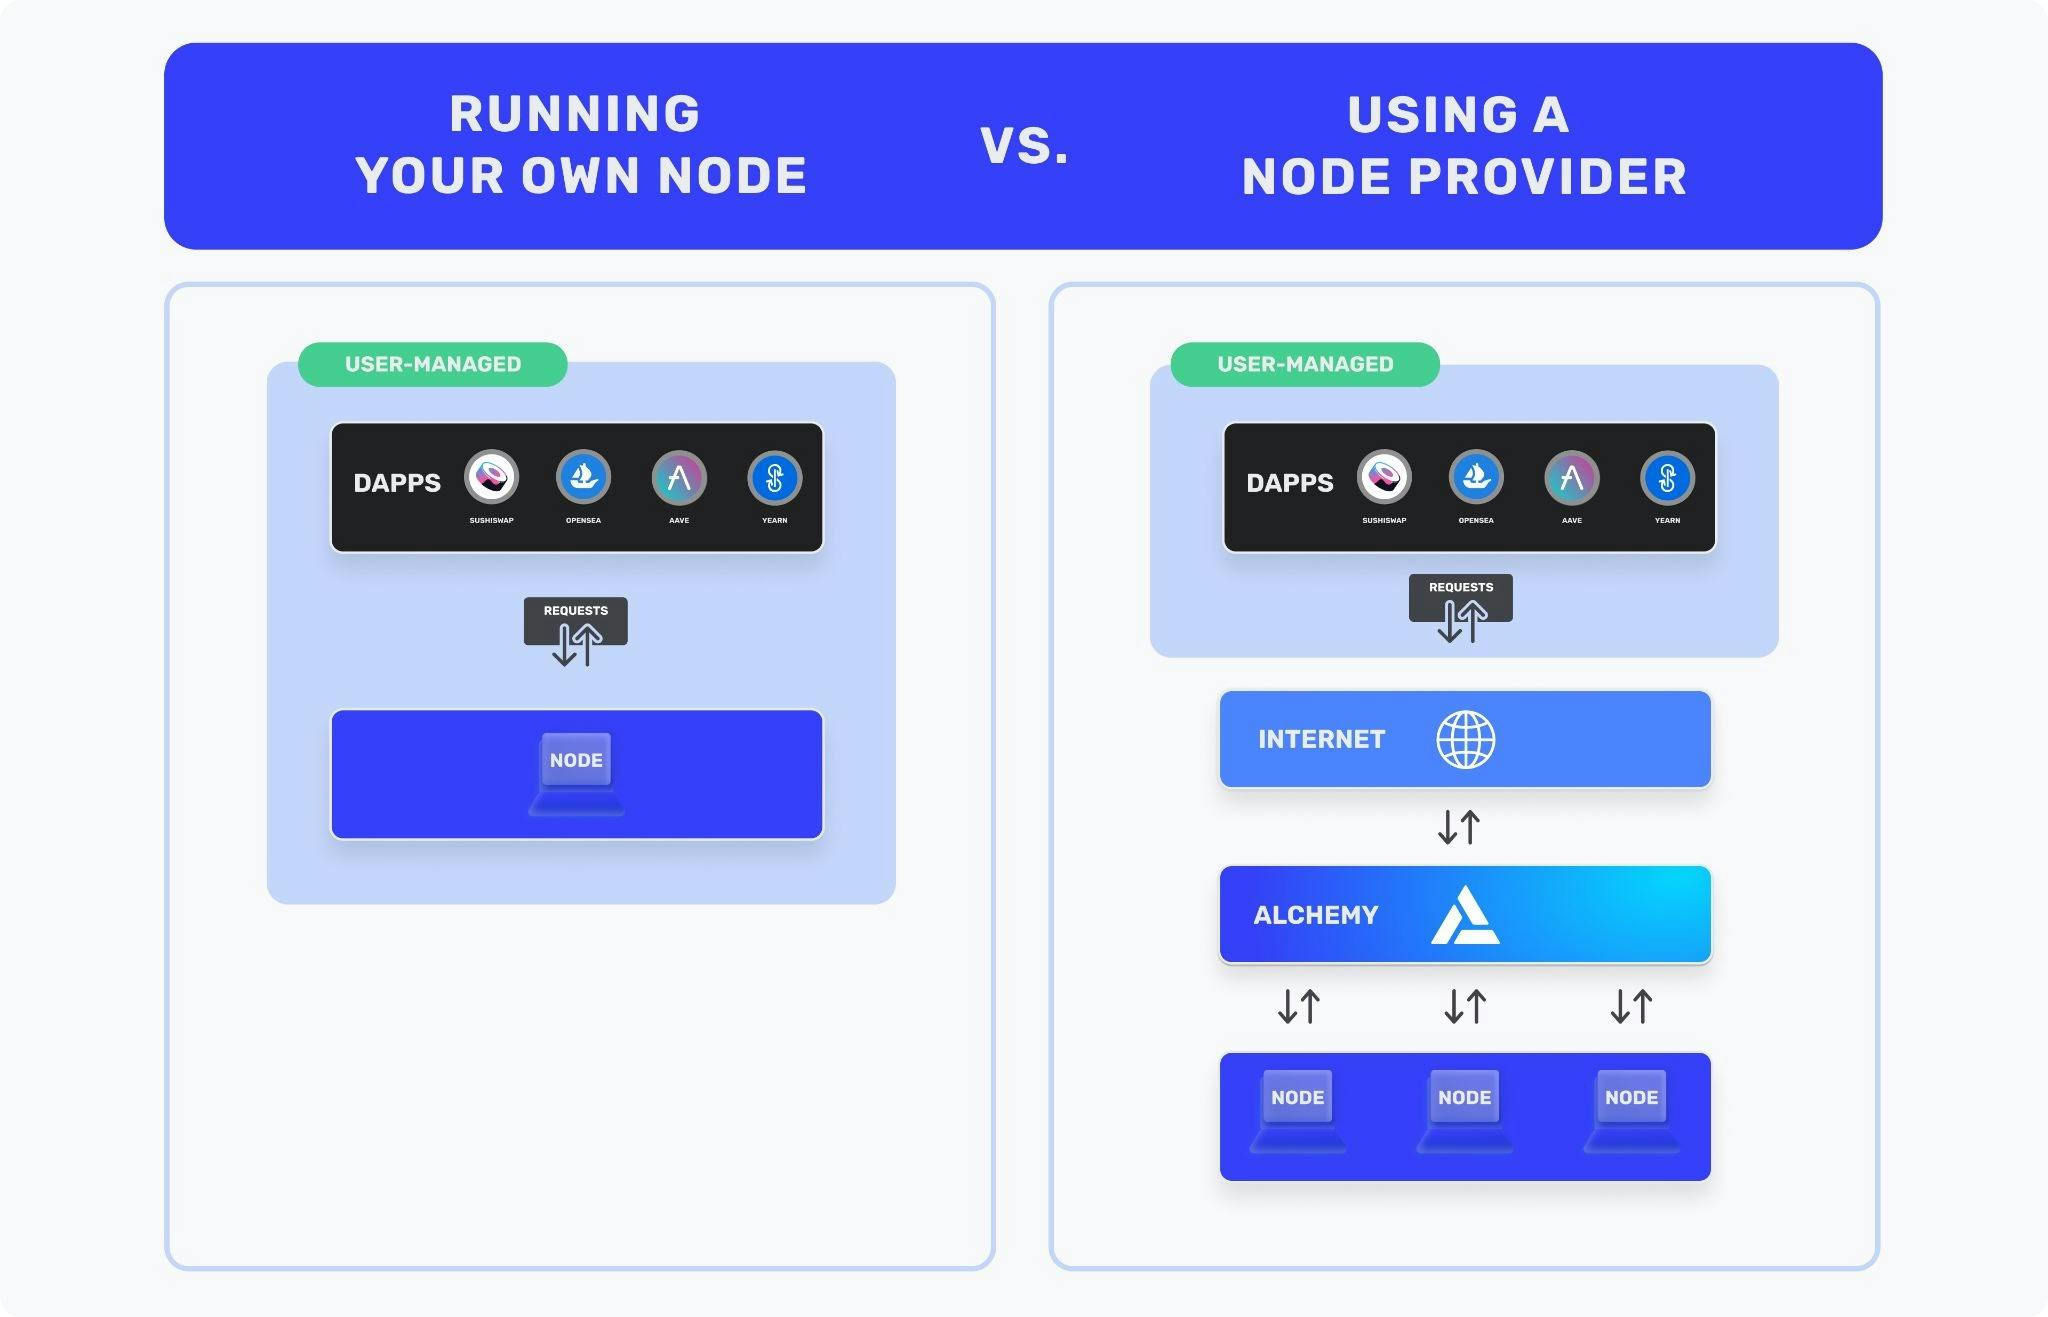 Running your own node vs. using a node provider